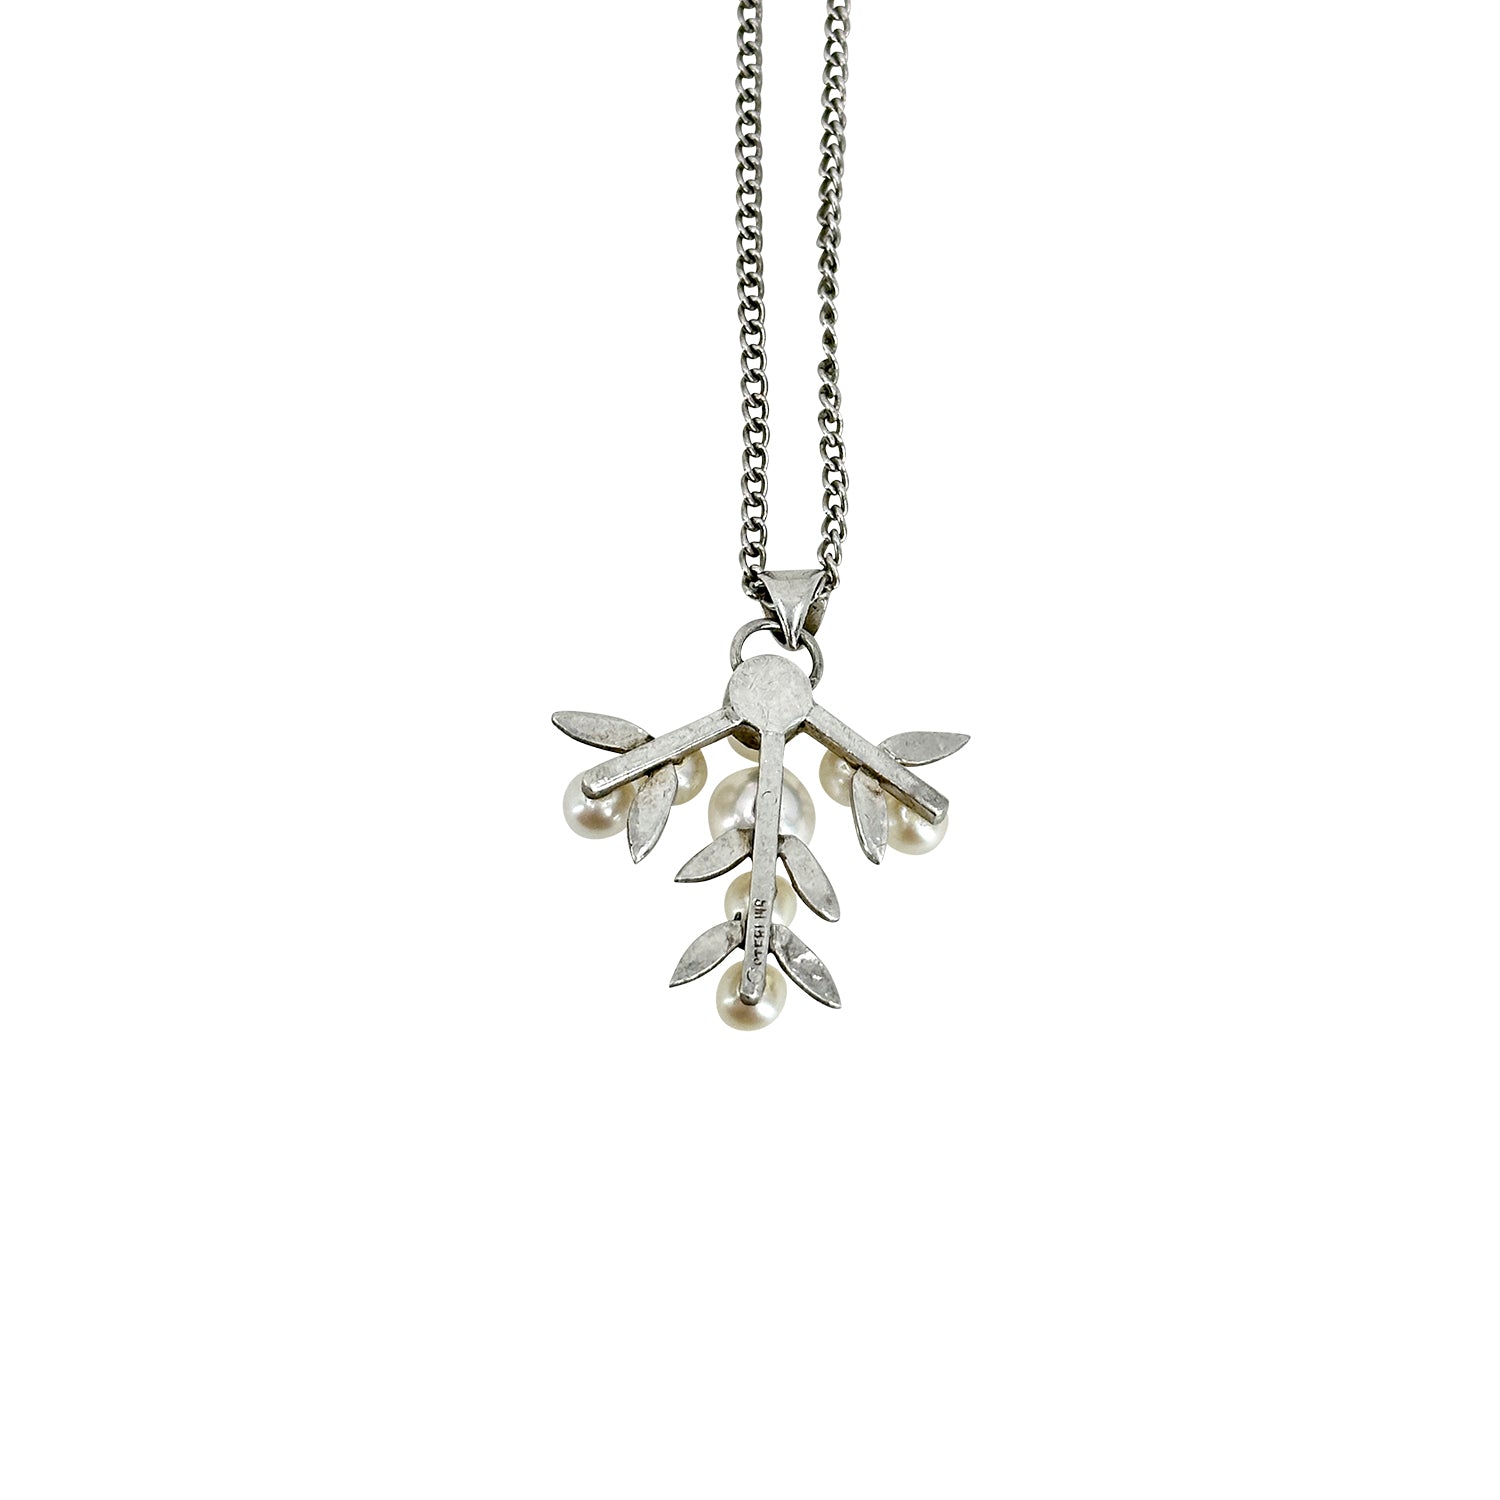 Leafy Vintage Japanese Saltwater Cultured Akoya Pearl Vintage Pendant Necklace- Sterling Silver 15.75 Inch